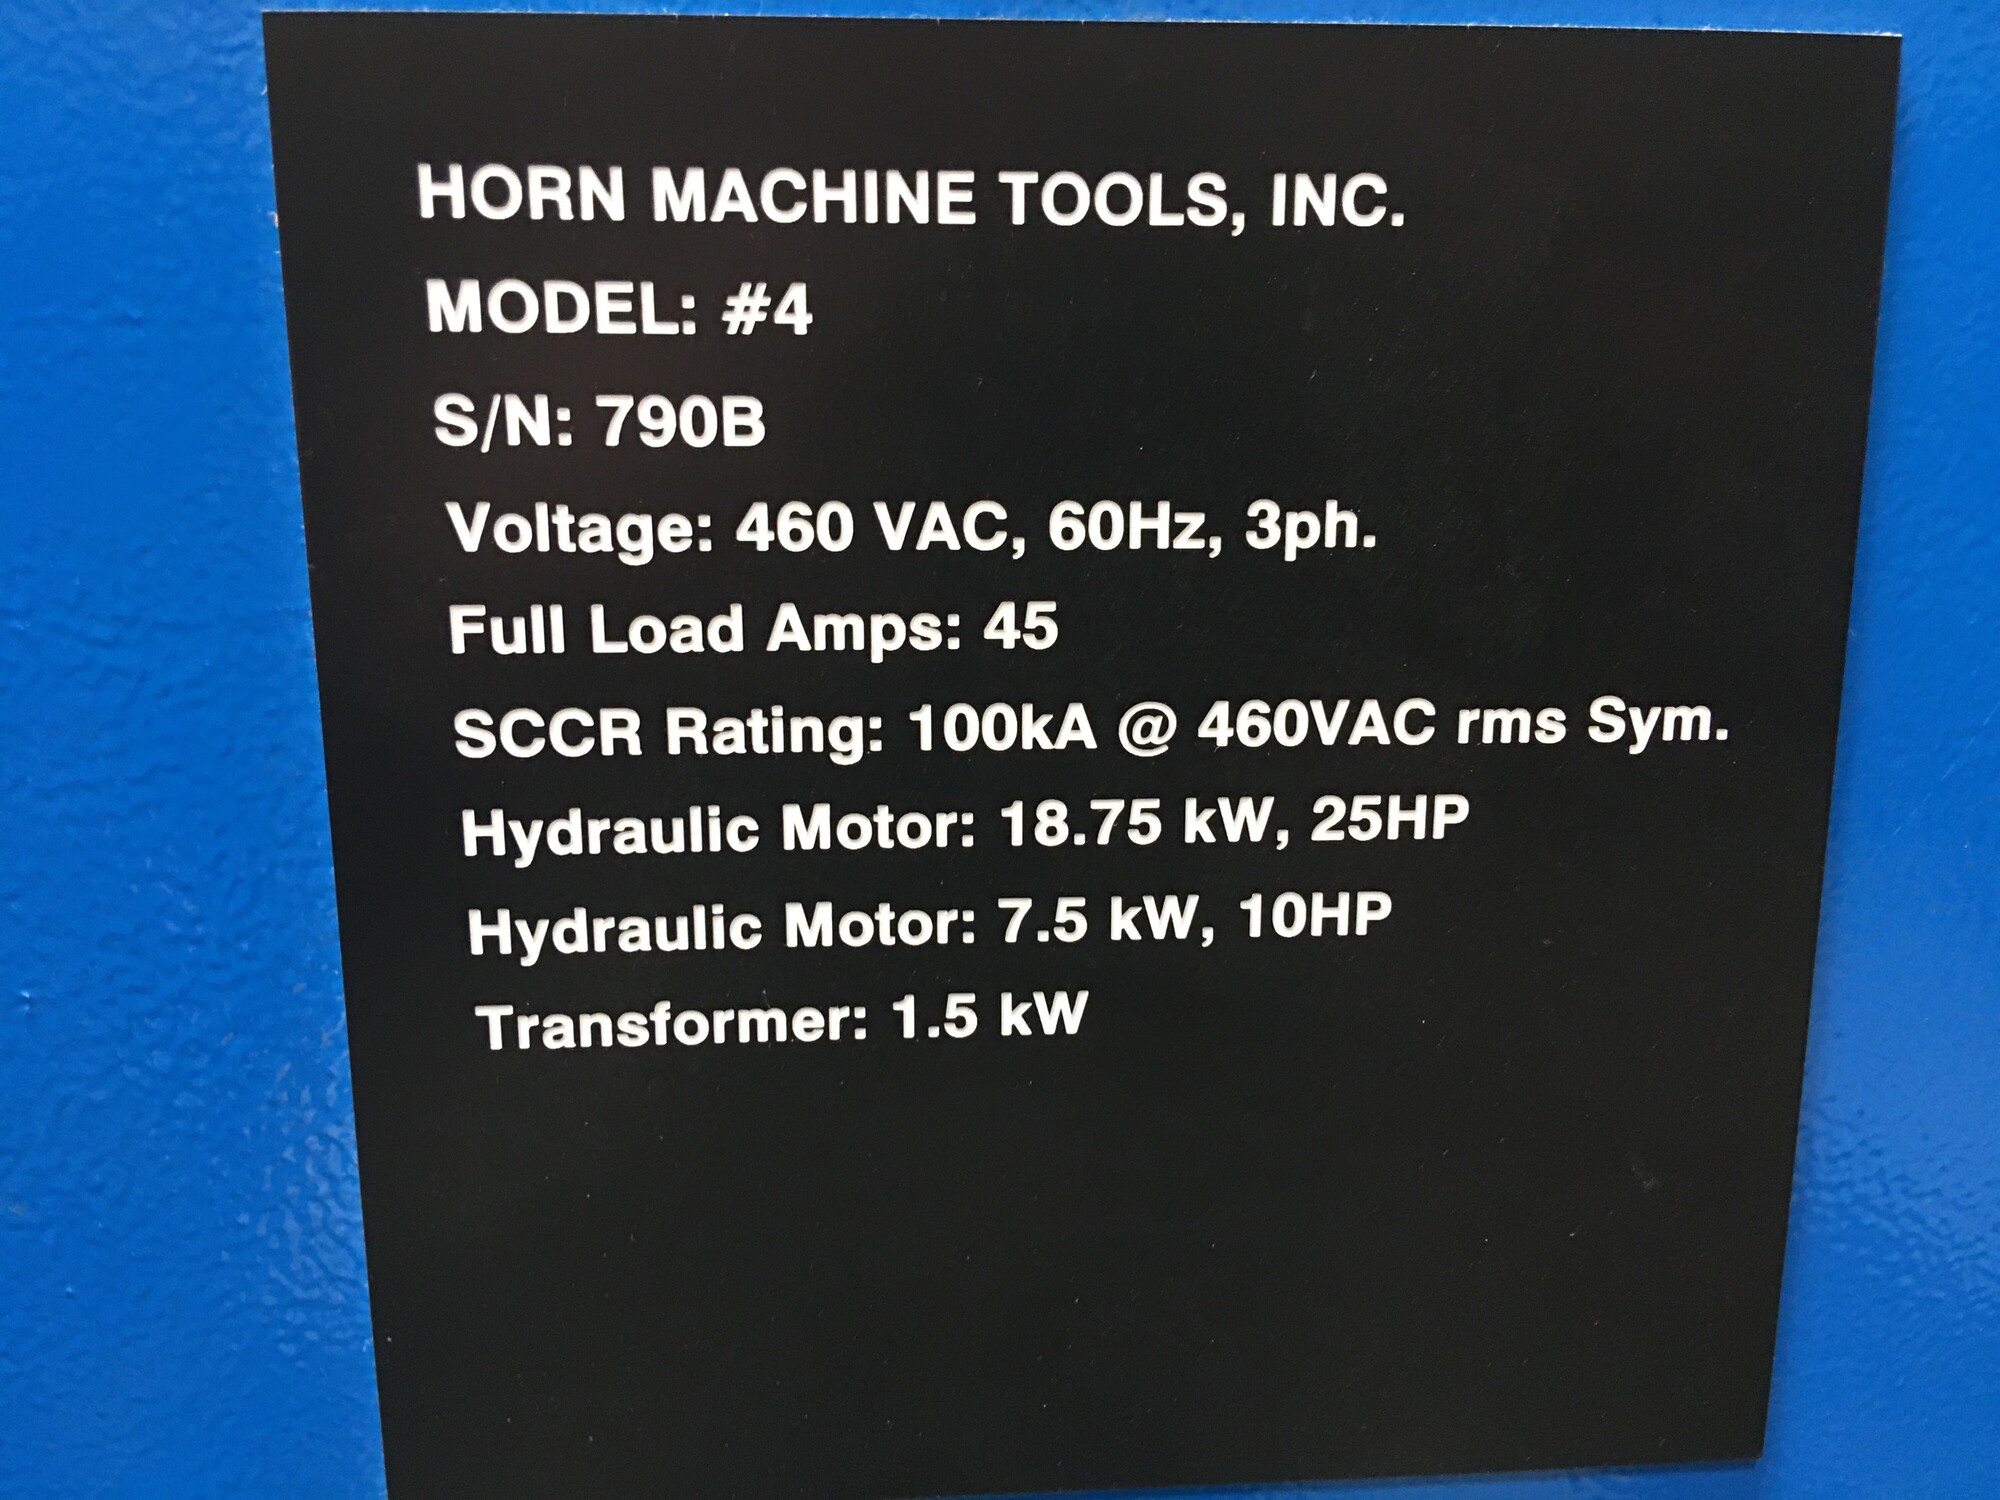 2014 HORN 4L-STD Pipe, Tube & Bar Benders | PM Machines